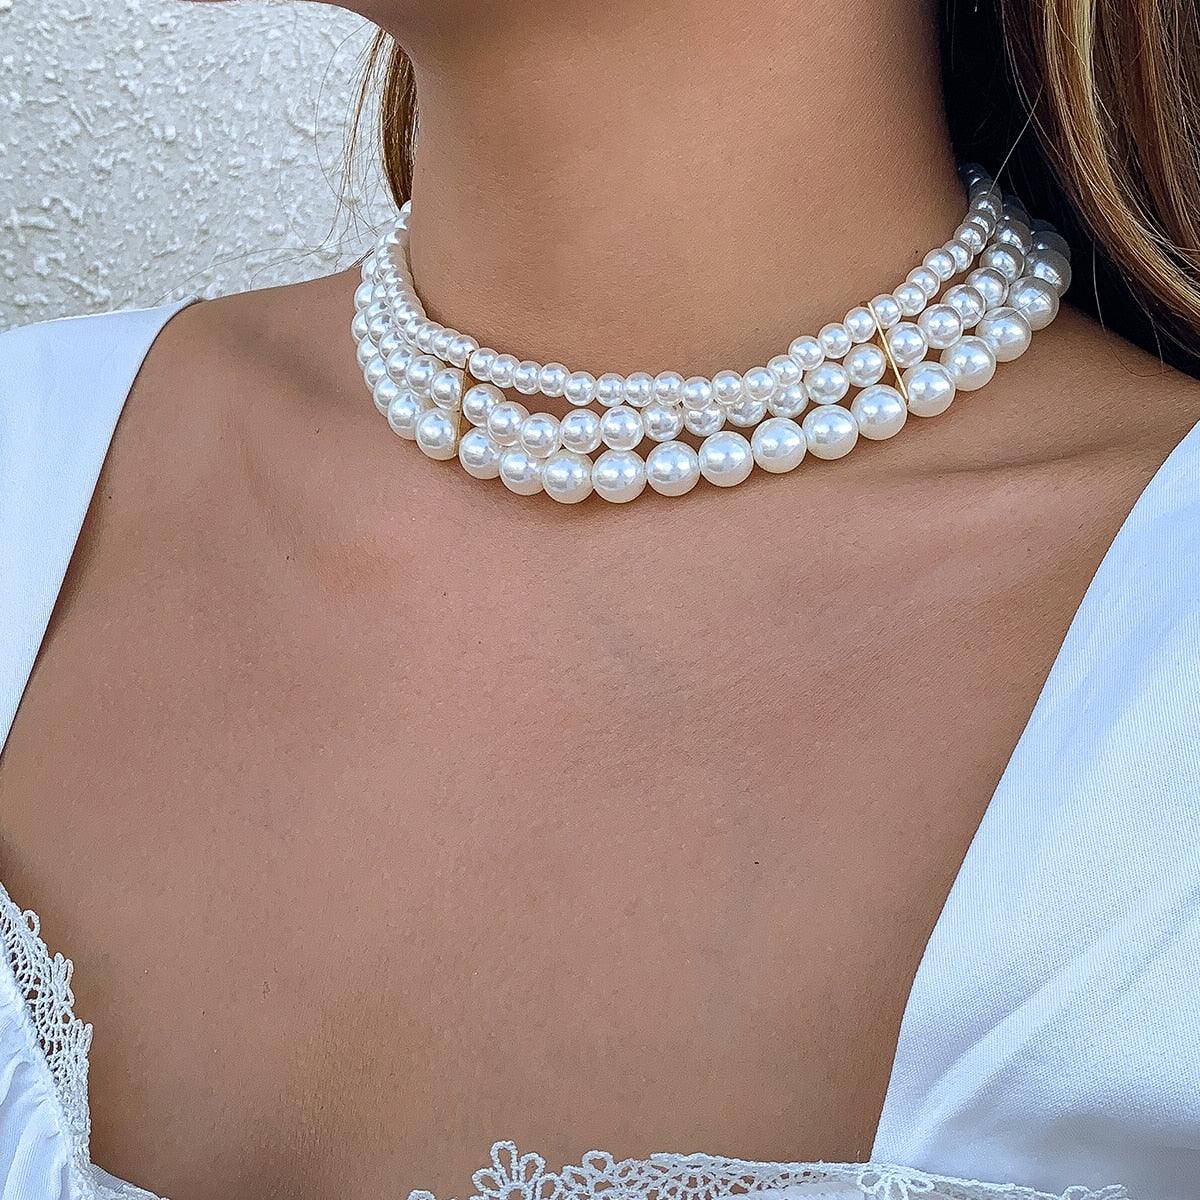 Elegant Multilayer Pearl Chain Necklace, Vintage Wedding Fashion Statement Choker - Belleroz